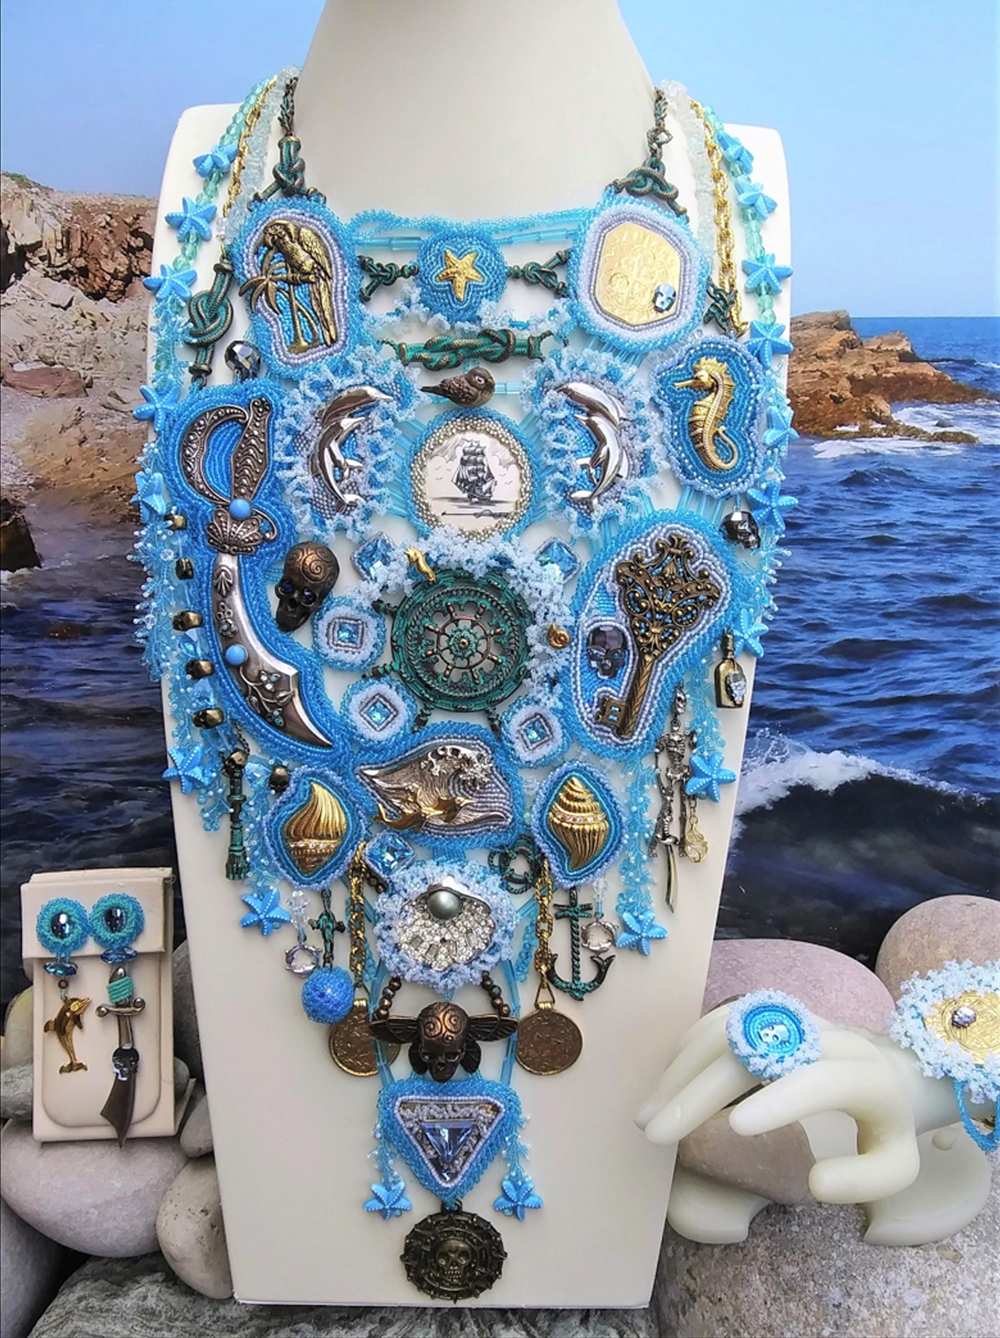 "Pirates Of The Caribbean Jewelry" inspired jewelry by Tatiana Van Iten